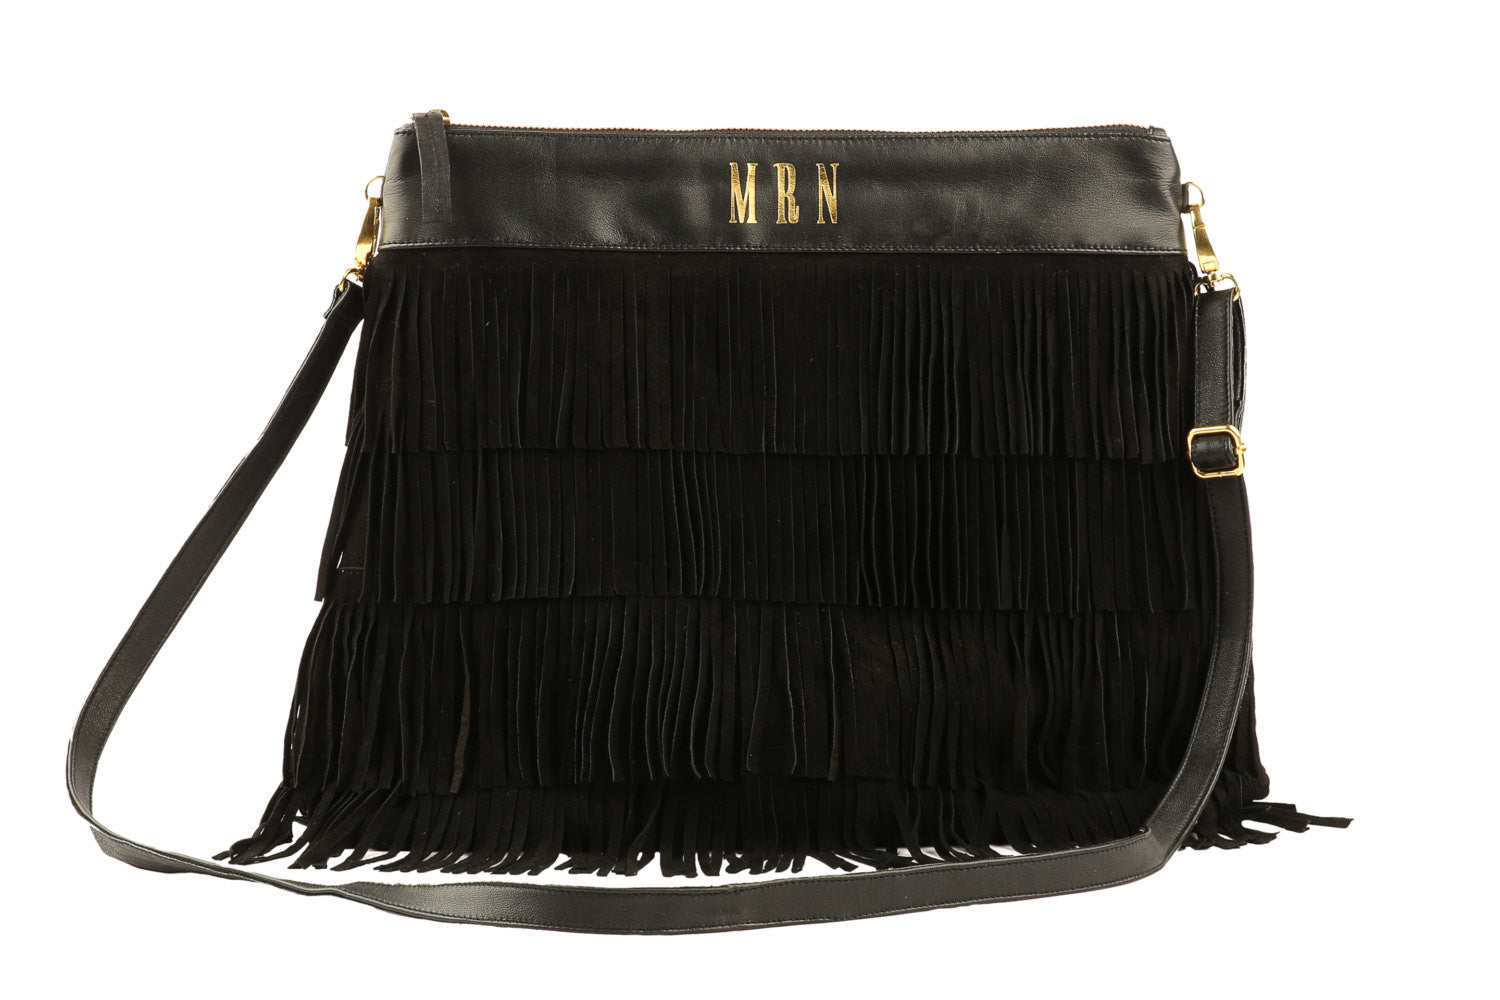 Black fringe crossbody leather women handbag